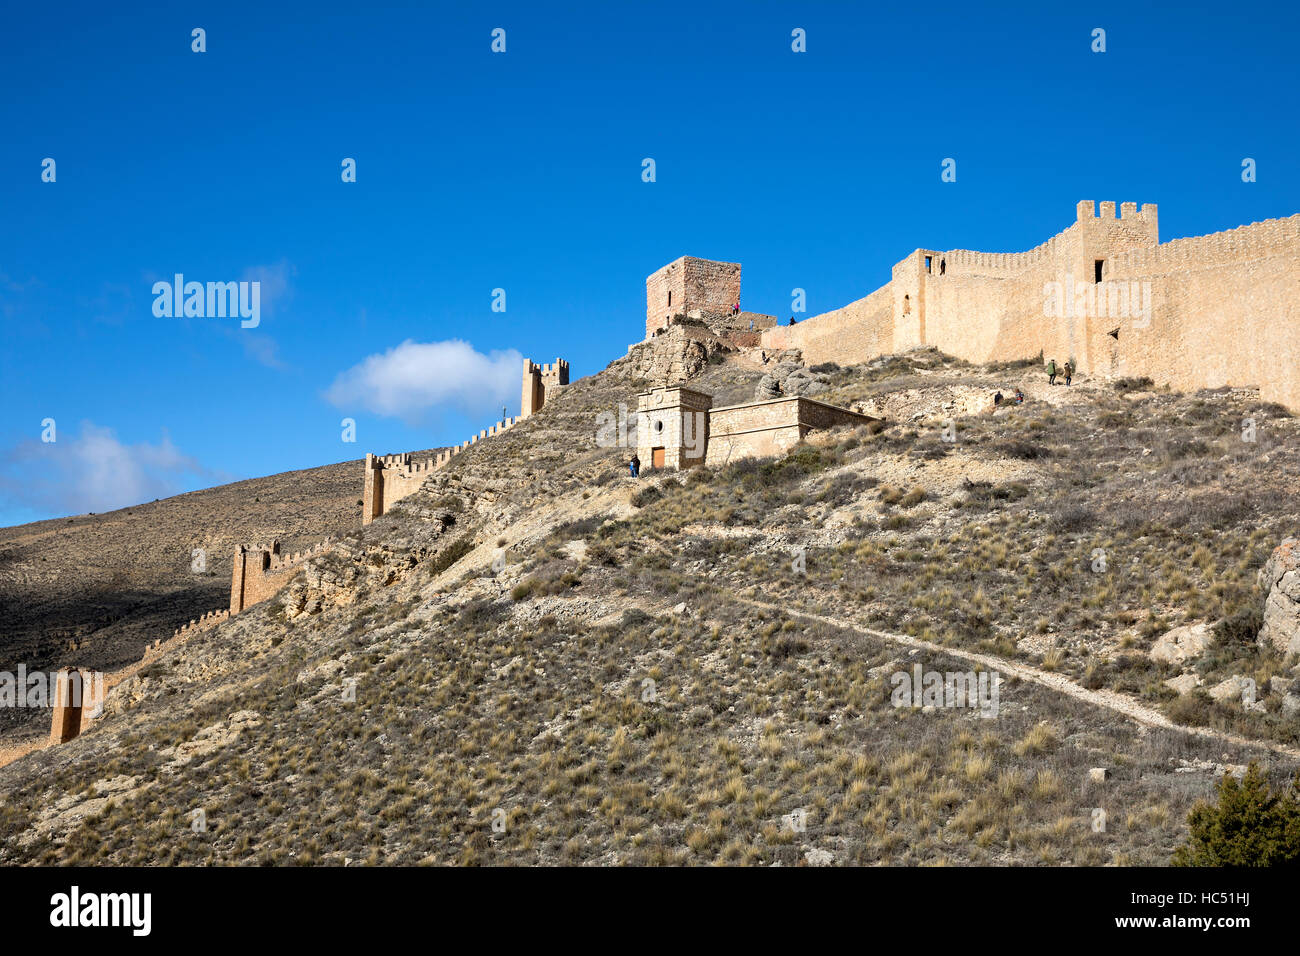 The town walls of Albarracin, Spain Stock Photo